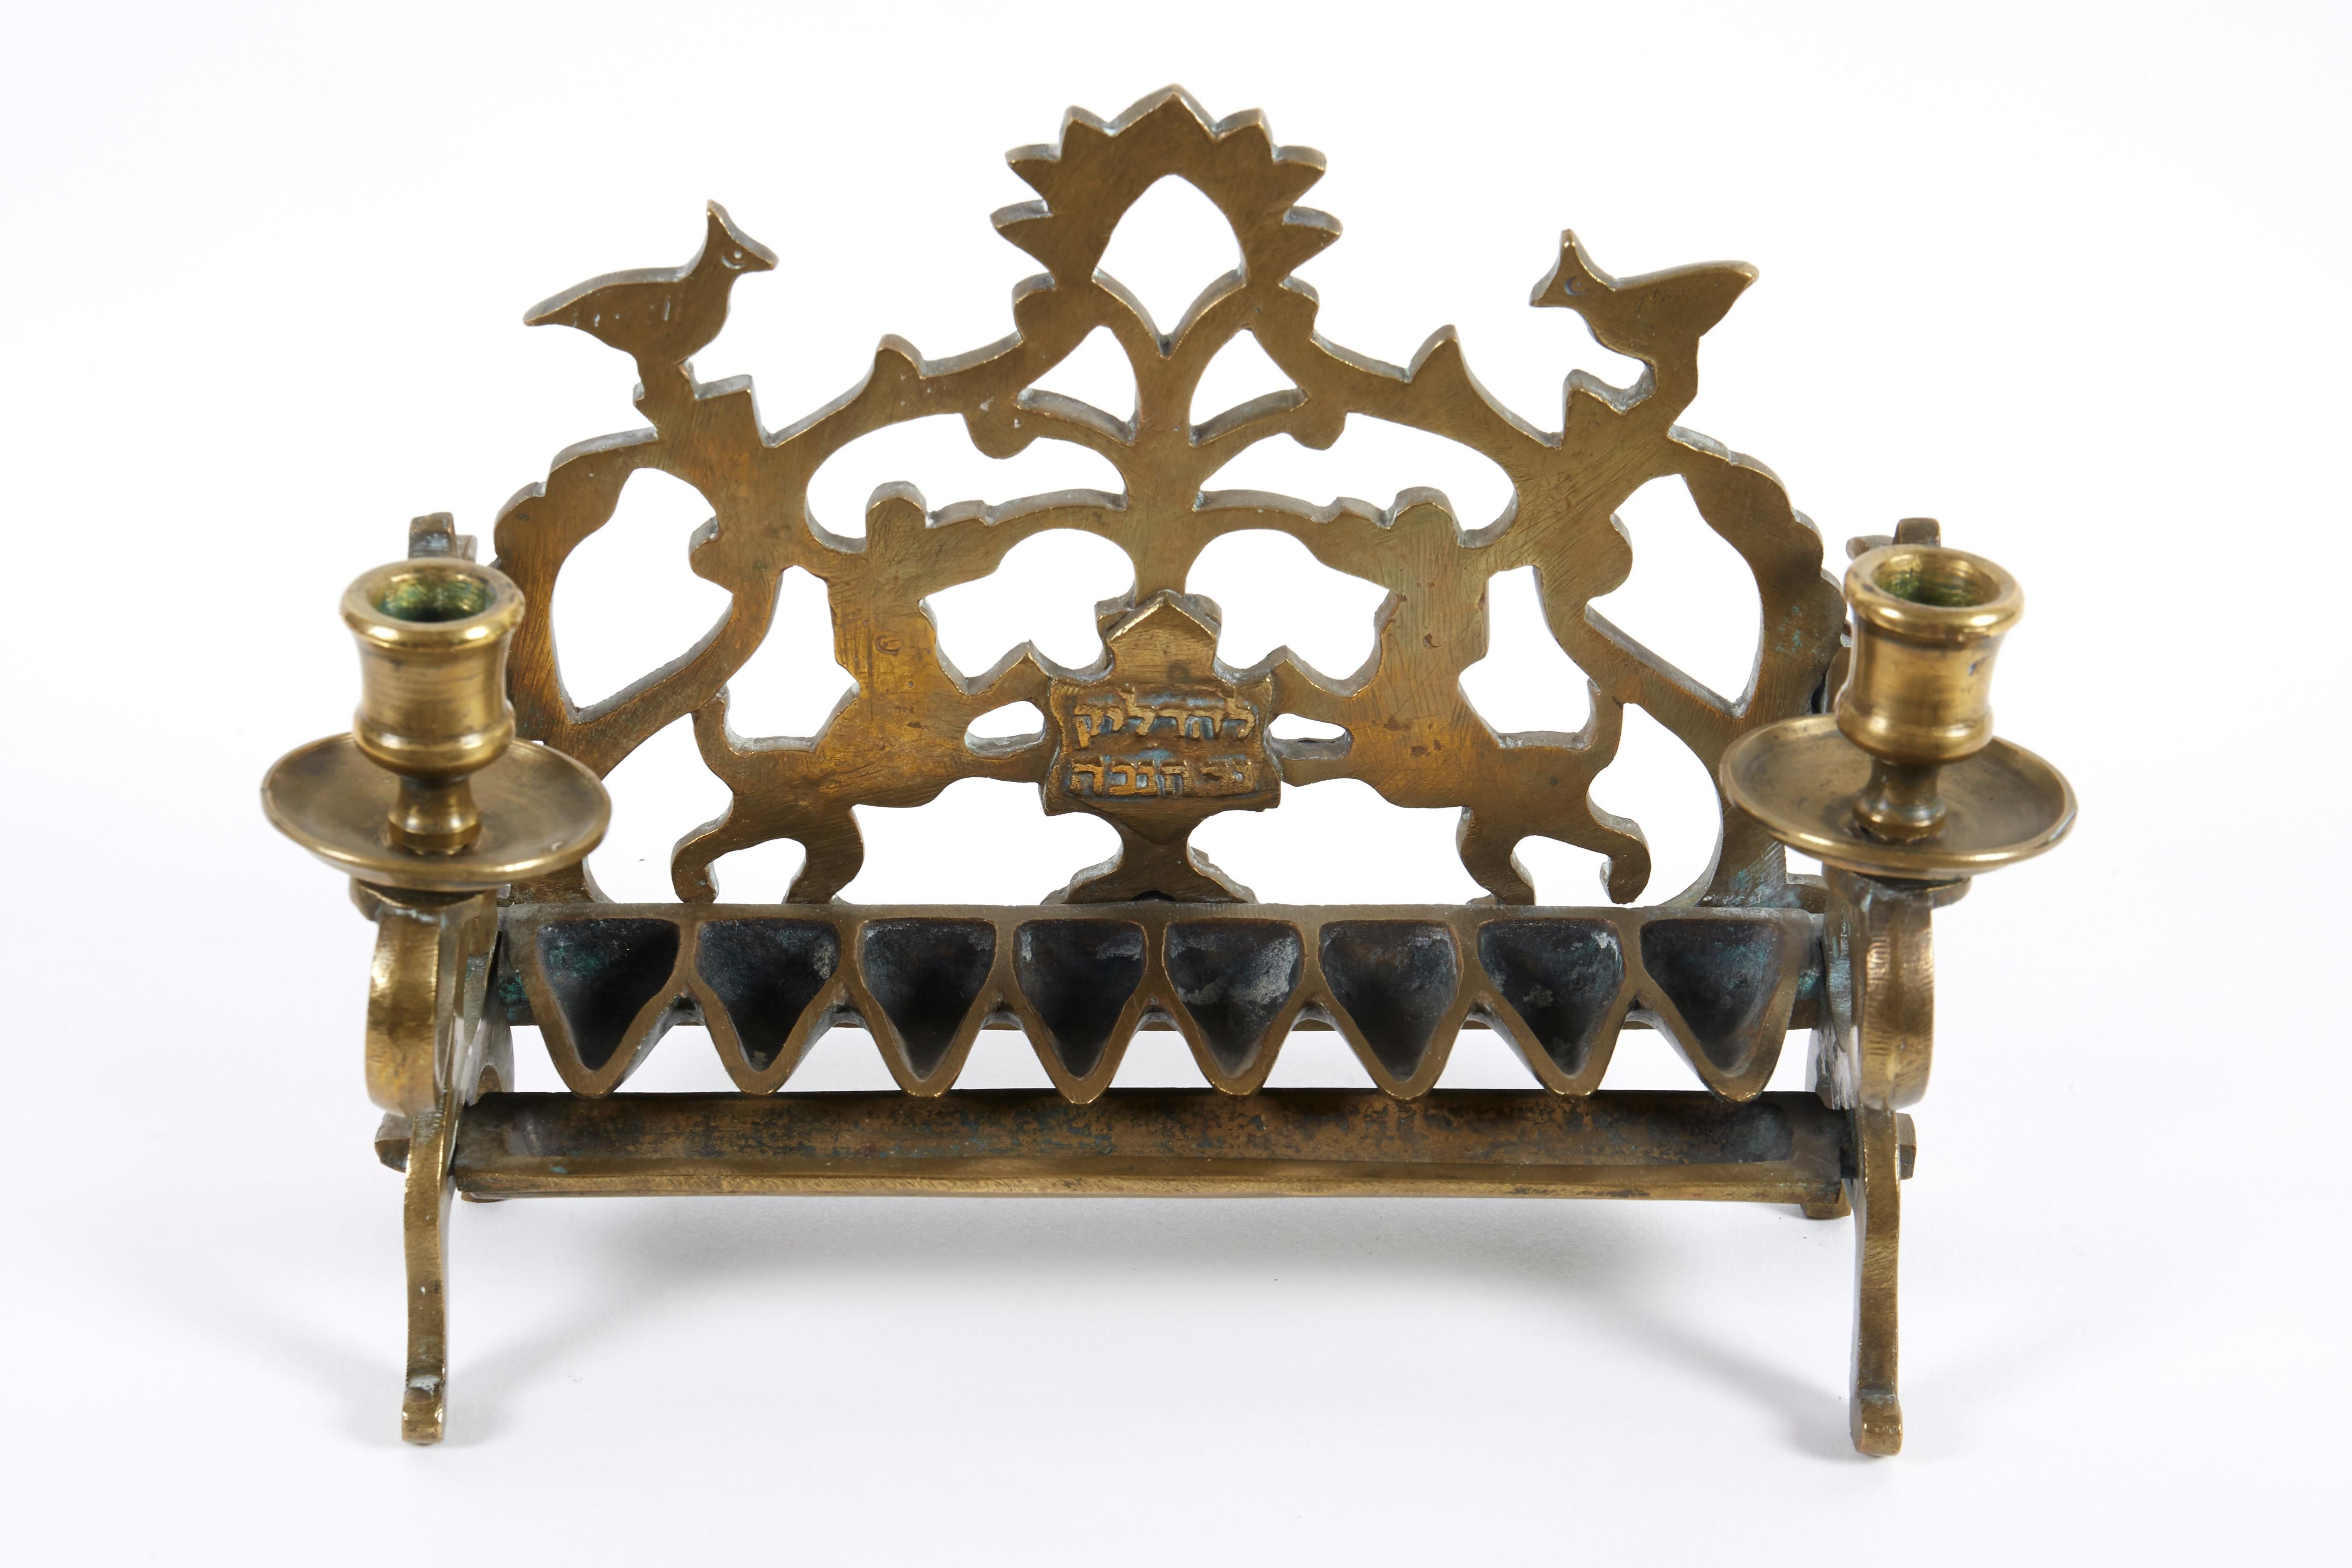 18th Century Galician Brass Hanukkah Lamp Menorah In Good Condition For Sale In New York, NY